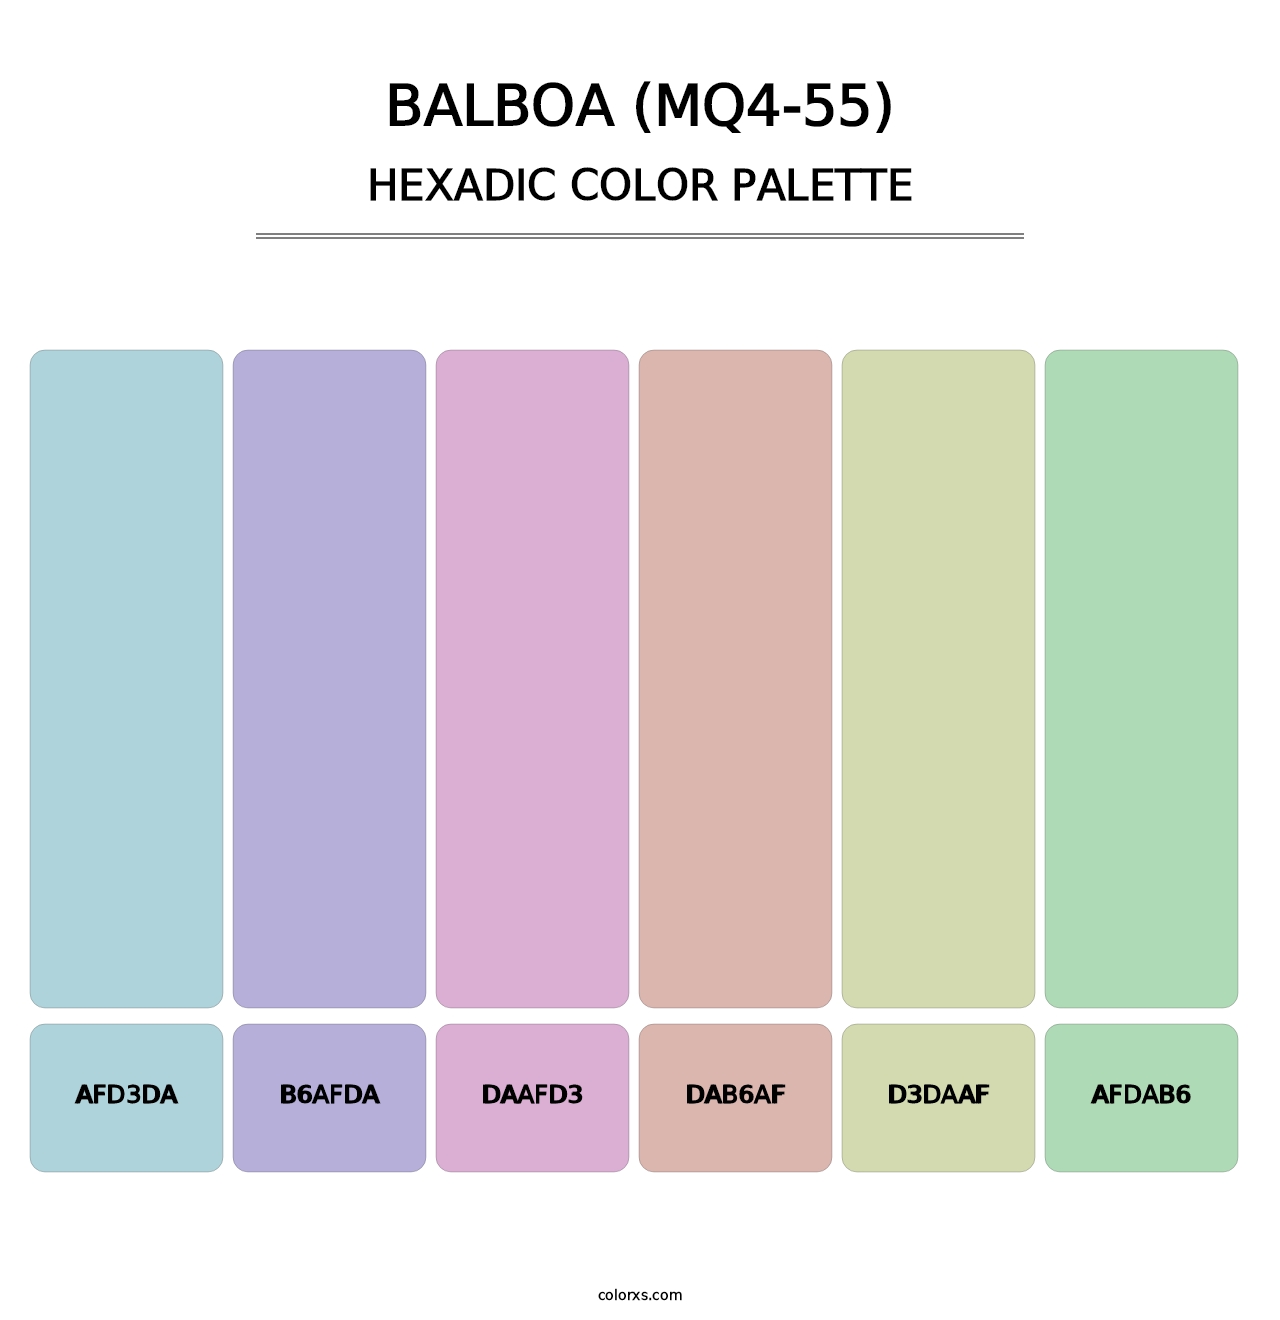 Balboa (MQ4-55) - Hexadic Color Palette